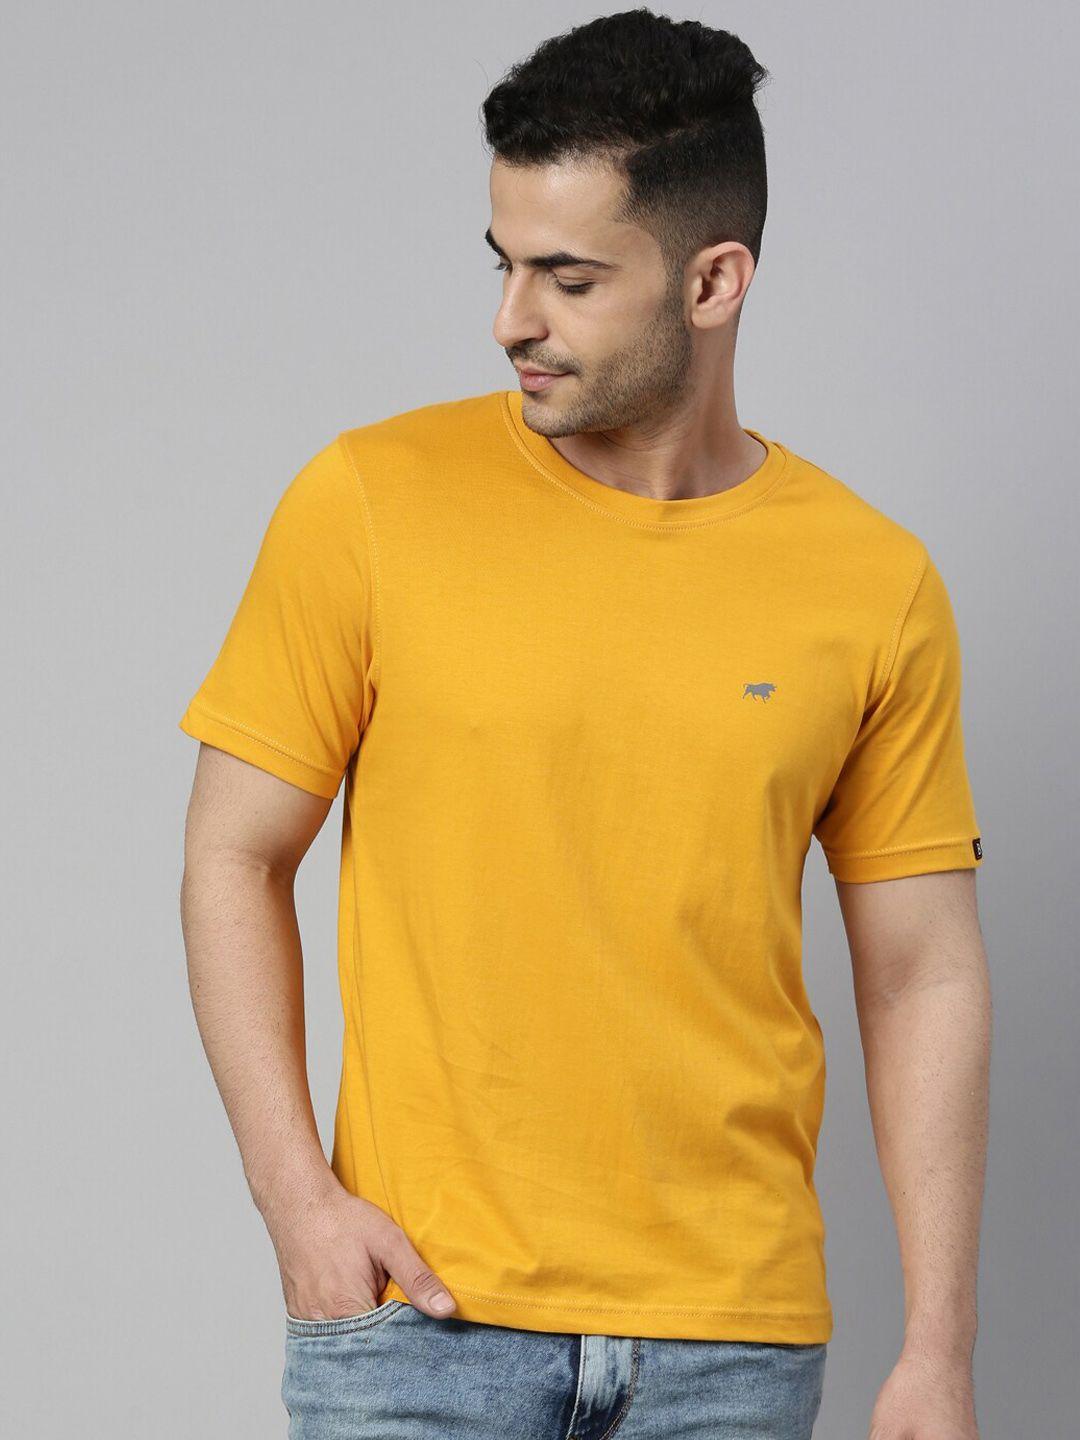 bushirt men mustard yellow pure cotton t-shirt